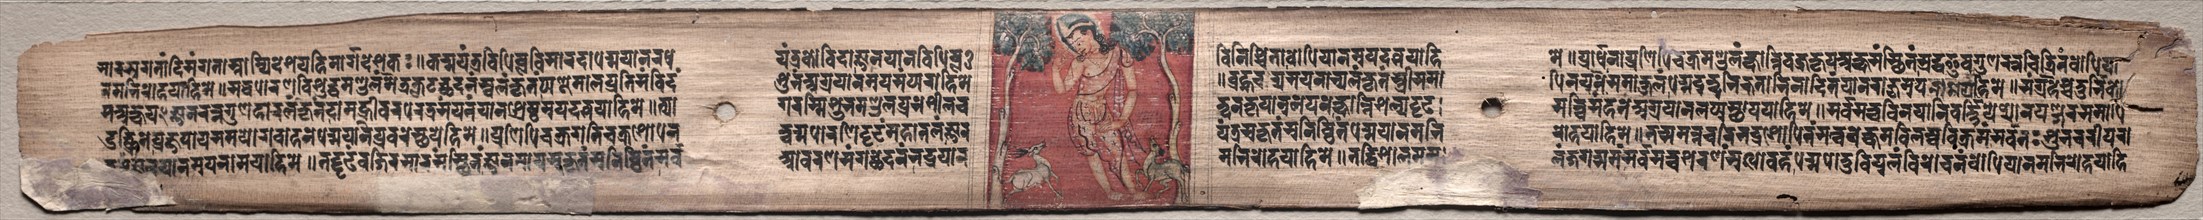 Leaf from Gandavyuha: Sudhana and Two Deer, from Chapter 3 Kalyanamitra Manjushri (recto),